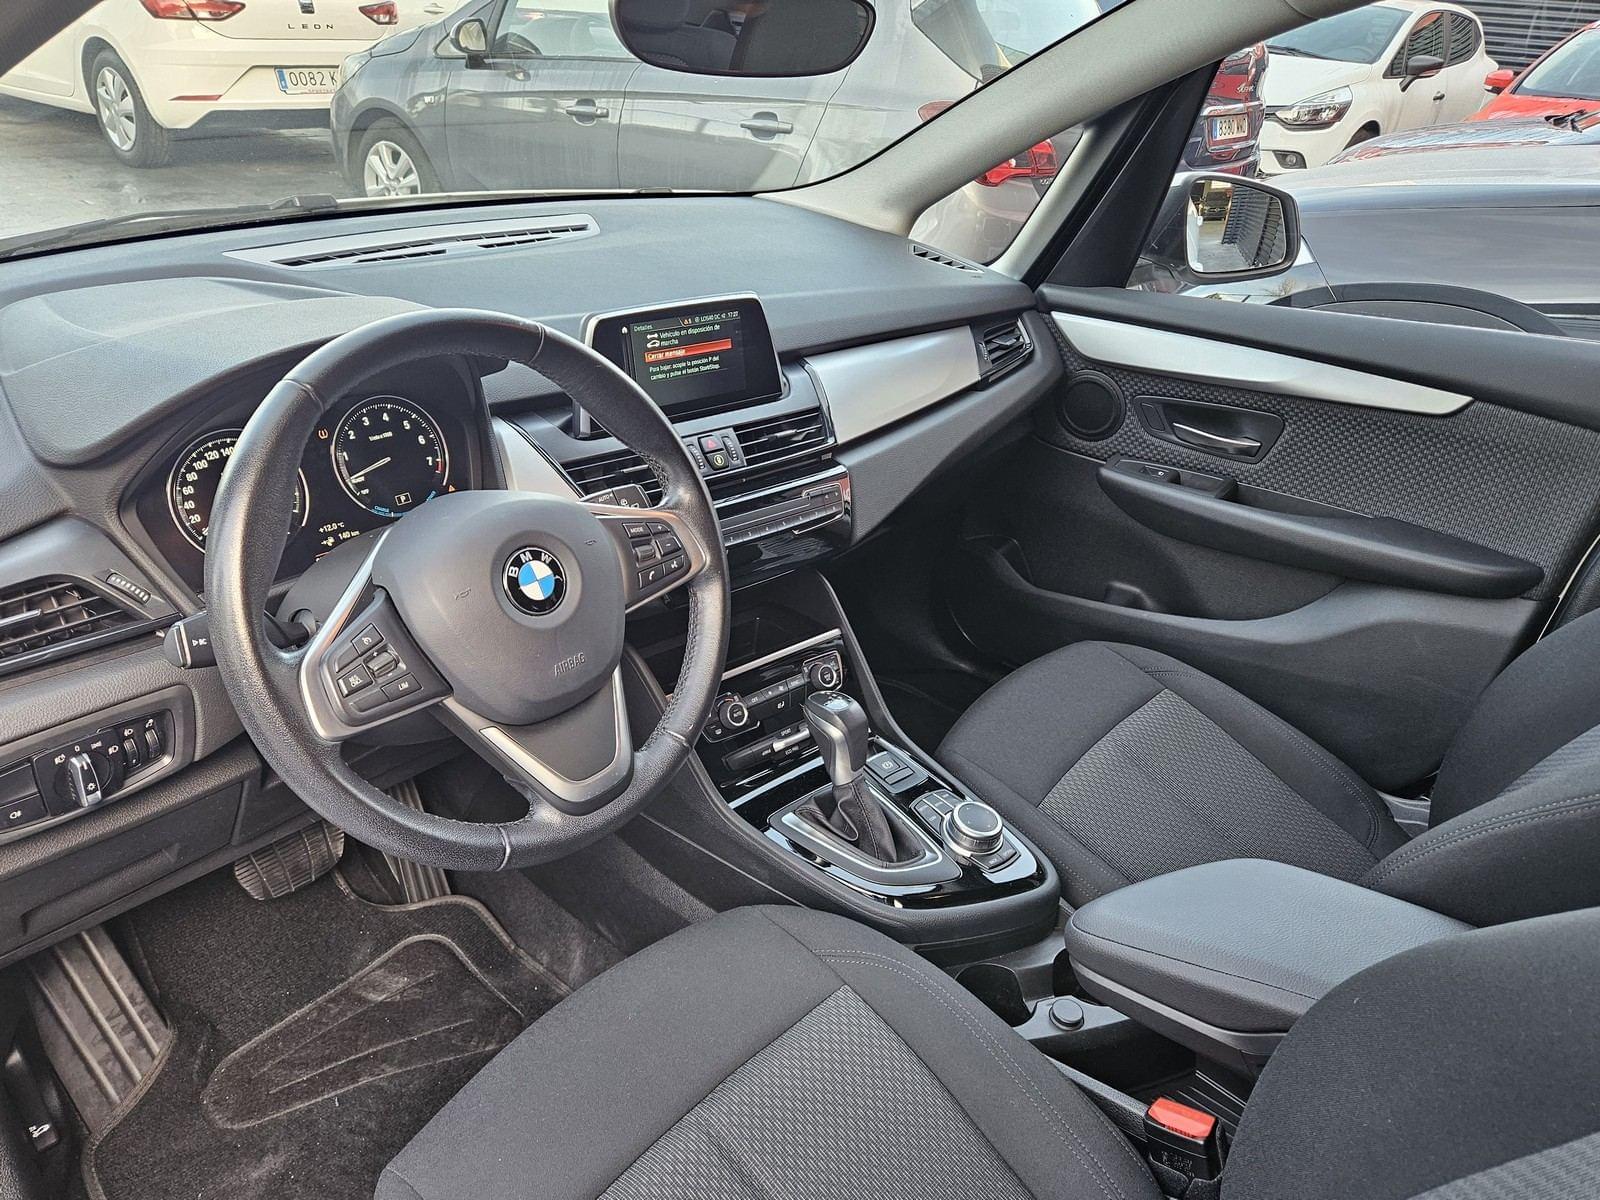 BMW SERIE 2 ACTIVE TOURER 225 XE IPERFORMANCE 1.5 135 CV AT6 E6DT 6 